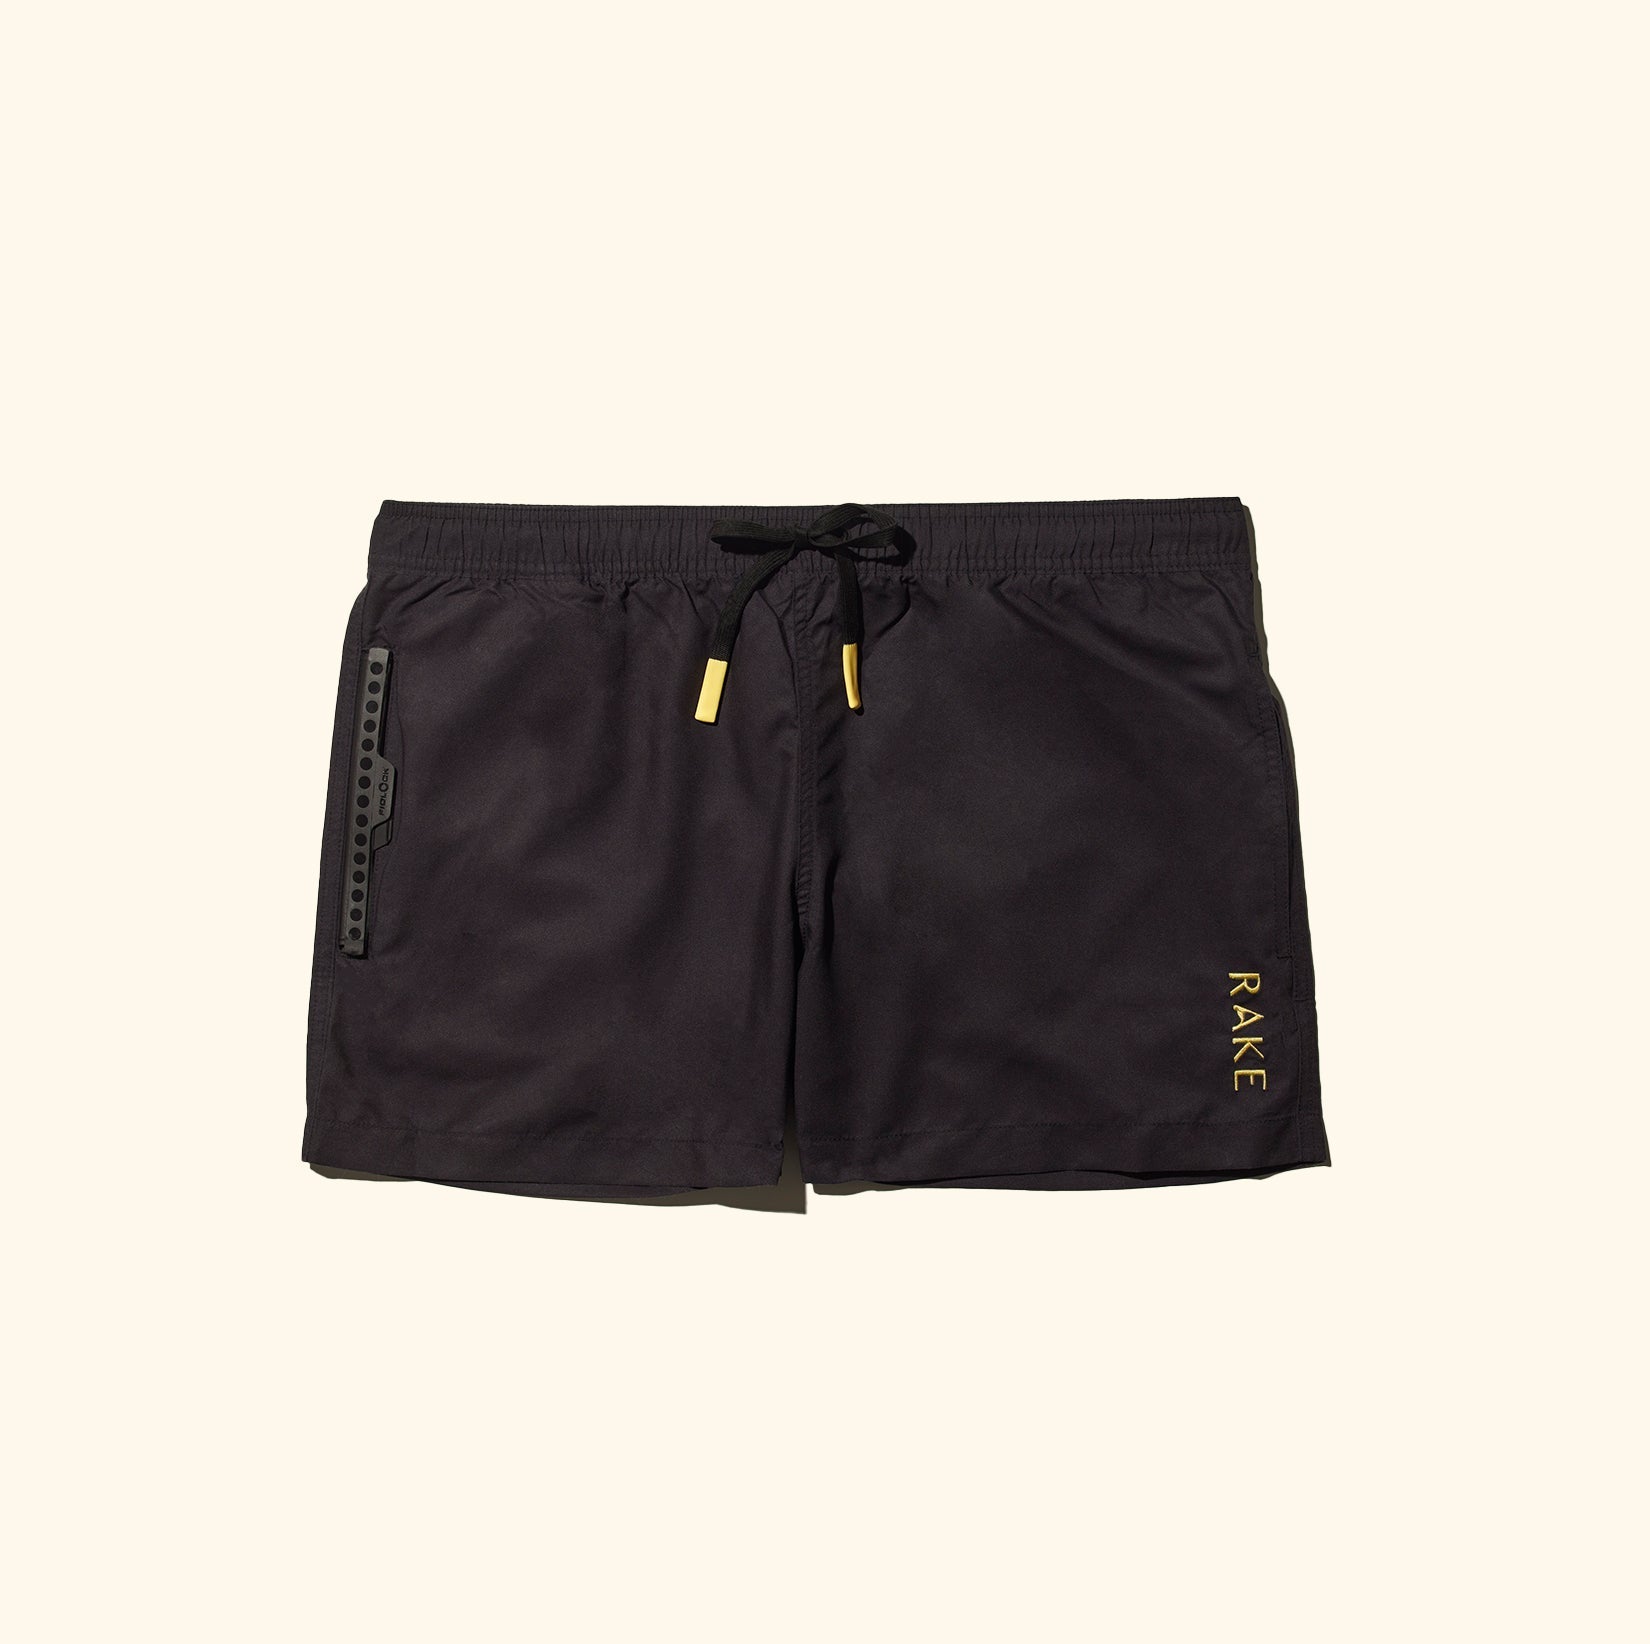 Waterproof swimming shorts -color black - Image front flat lay - by RAKE - Size xs till xxl - by RAKE XS